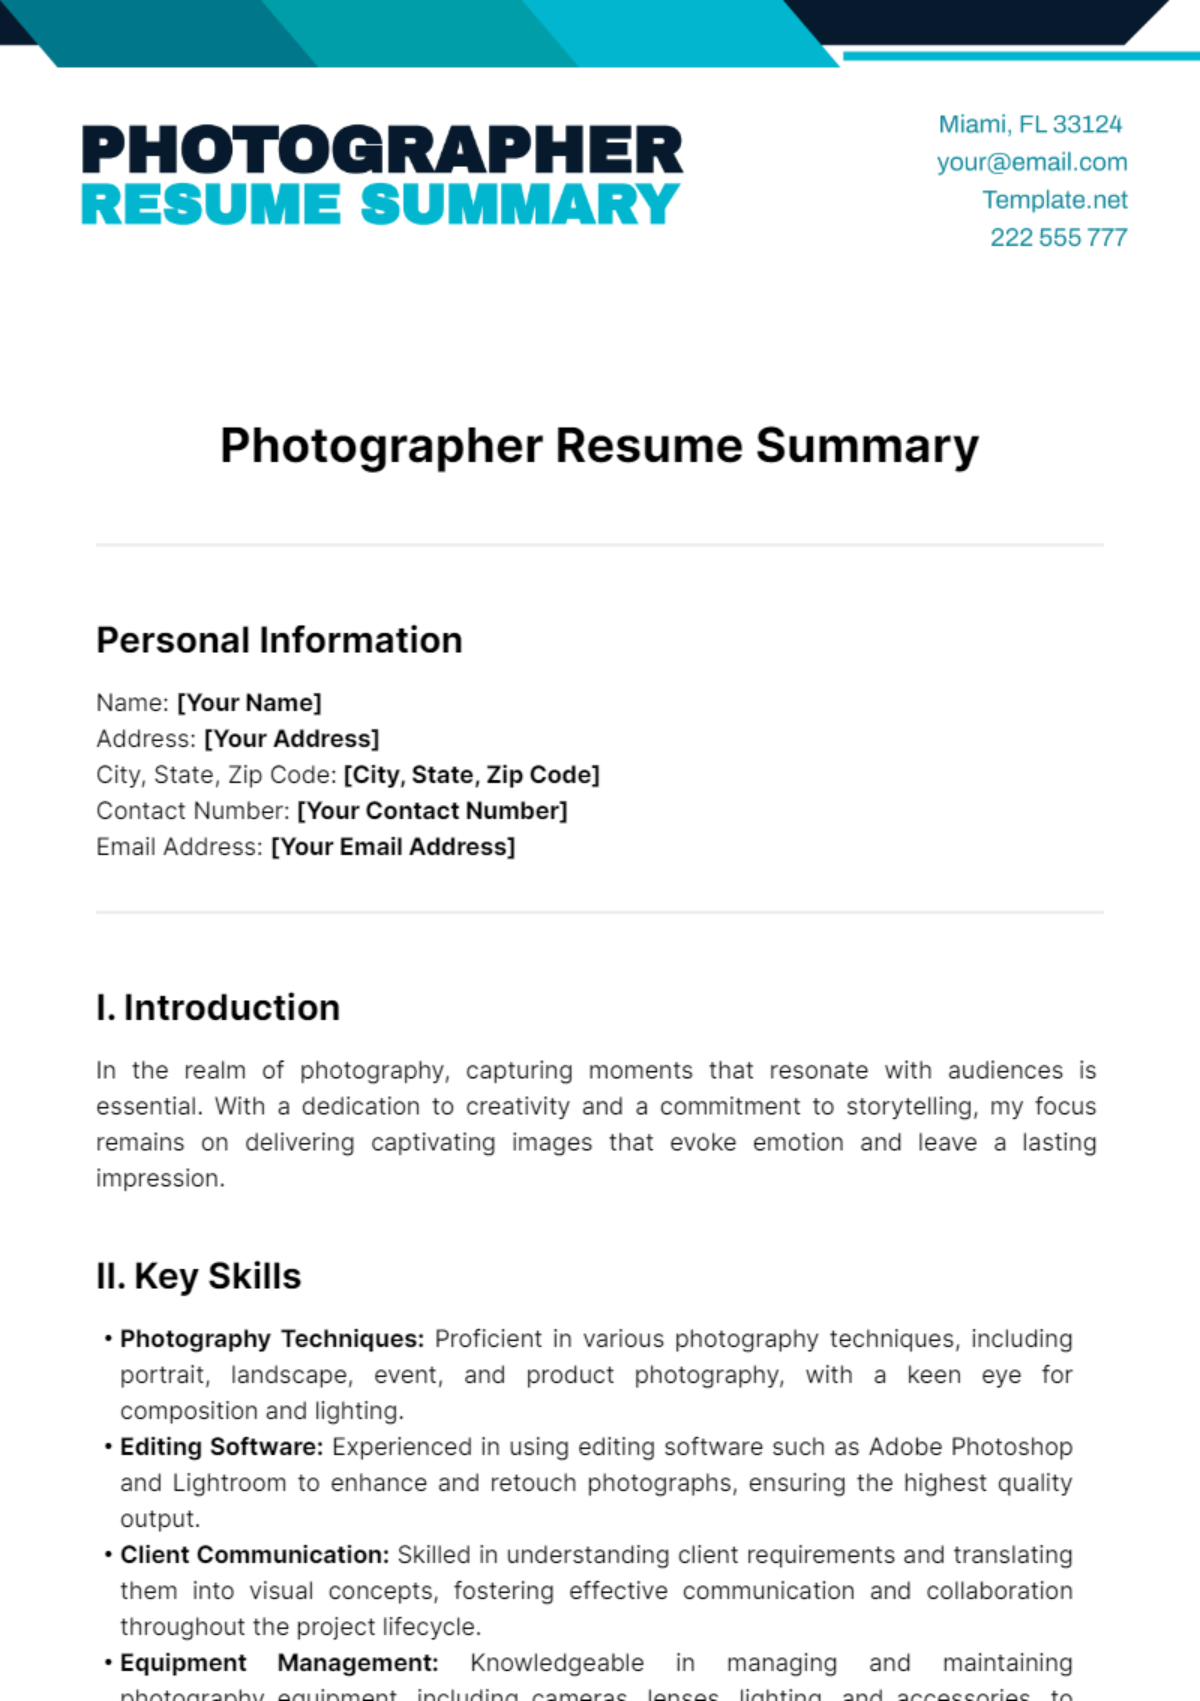 Photographer Resume Summary Template